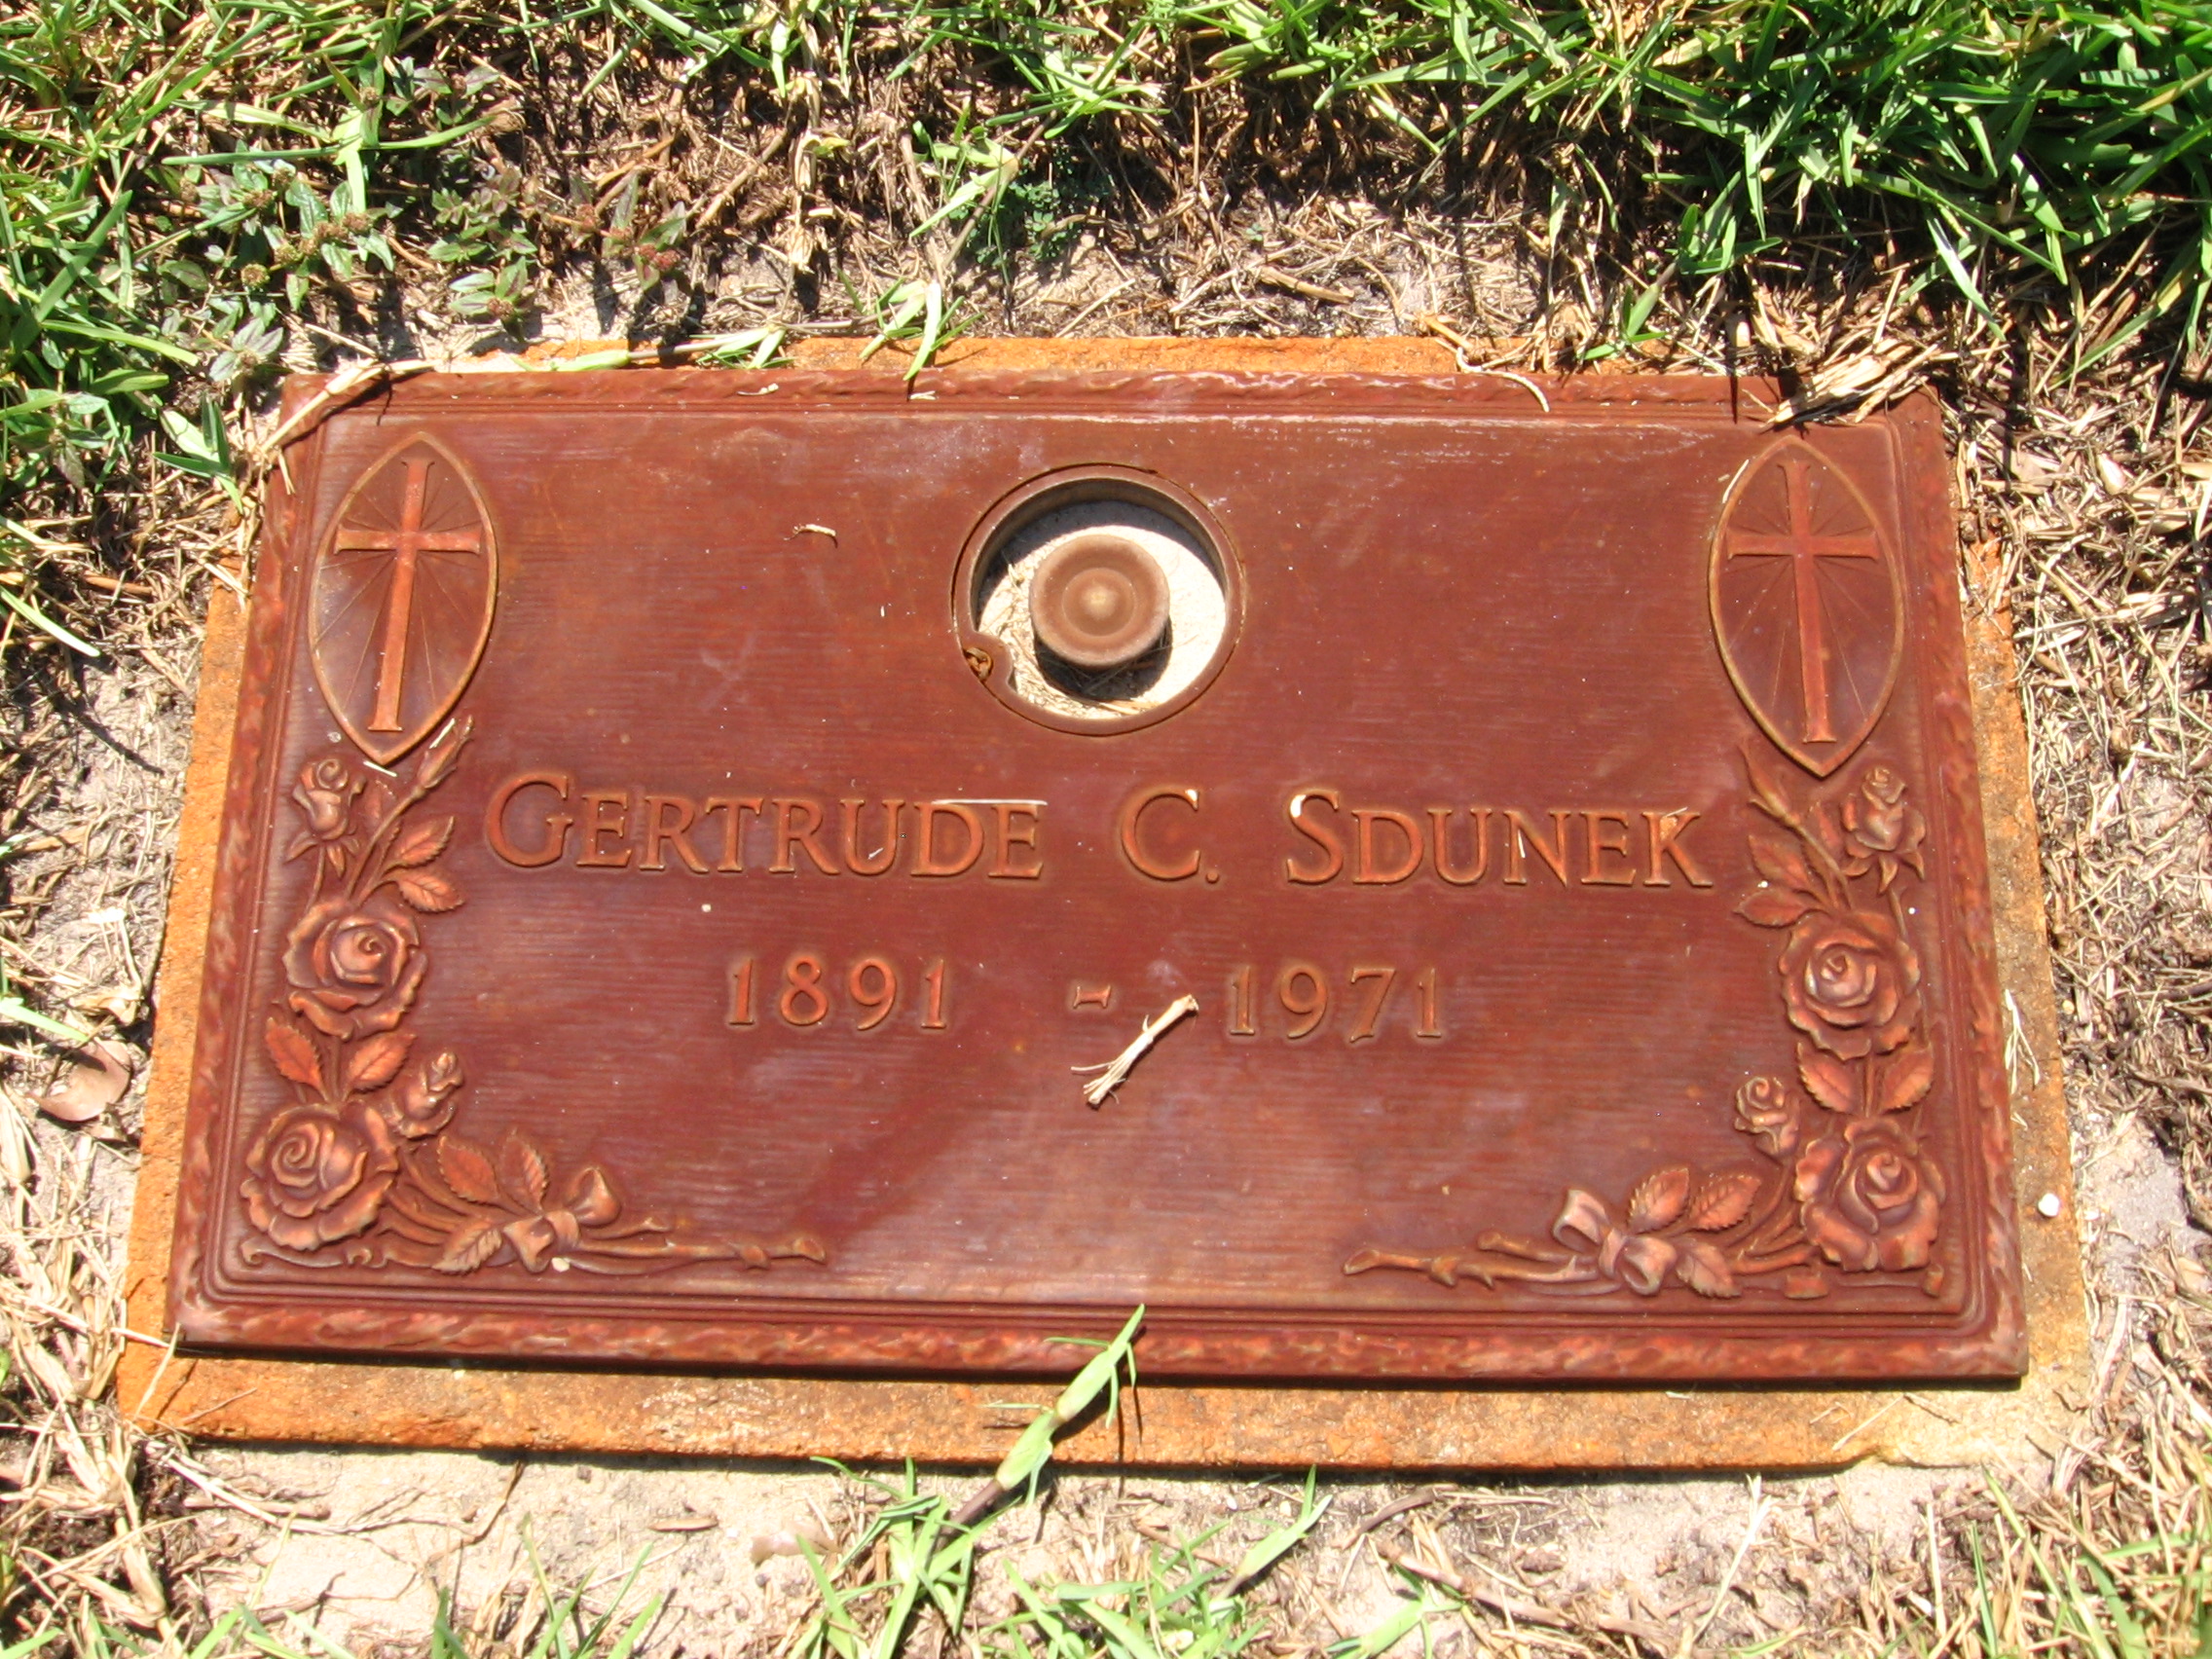 Gertrude C Sdunek